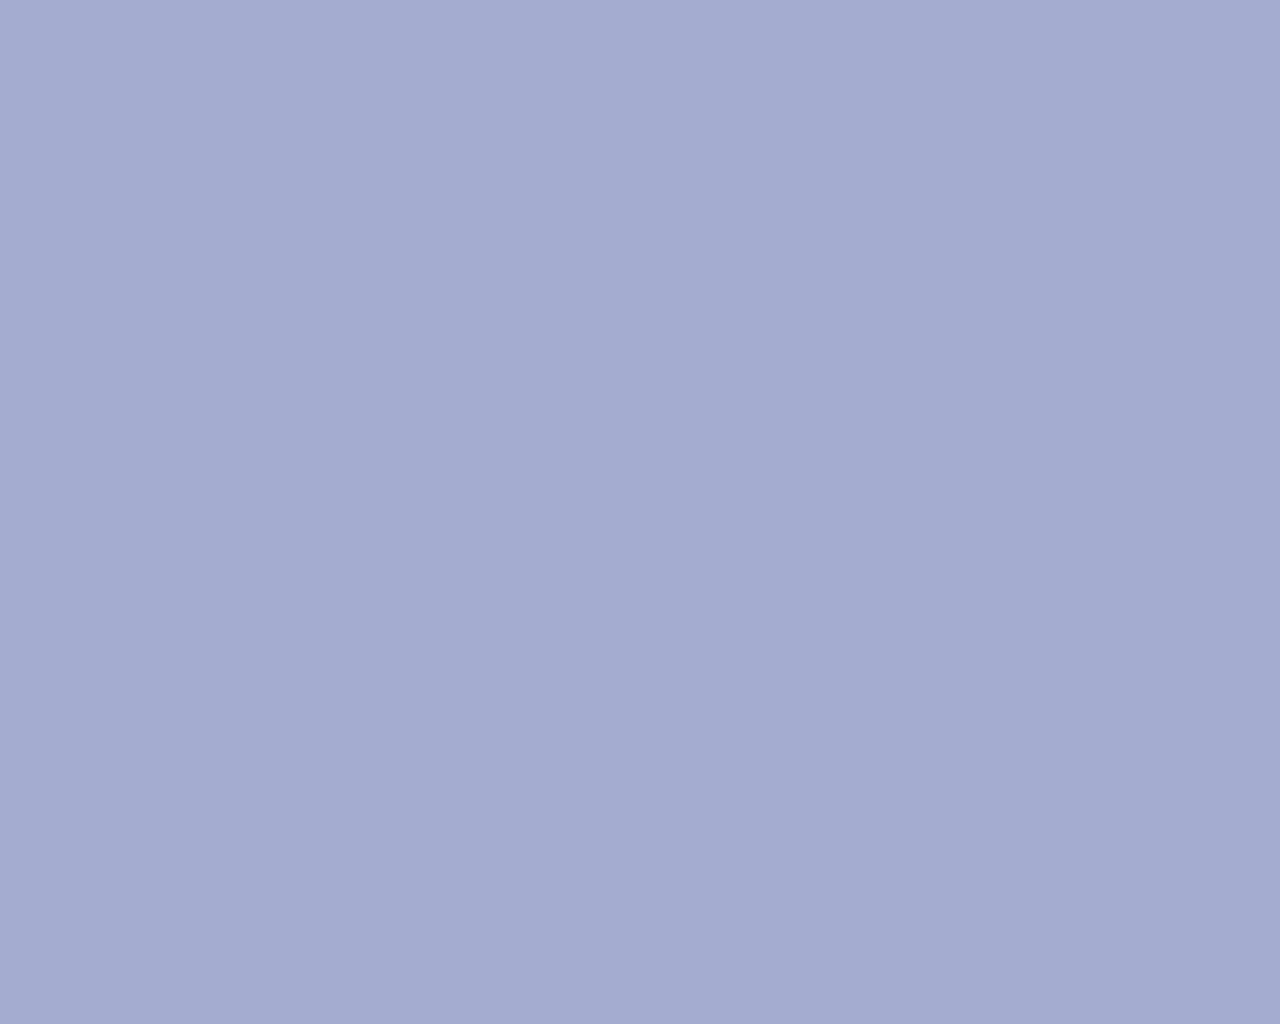 1280x1024 Wild Blue Yonder Solid Color Background